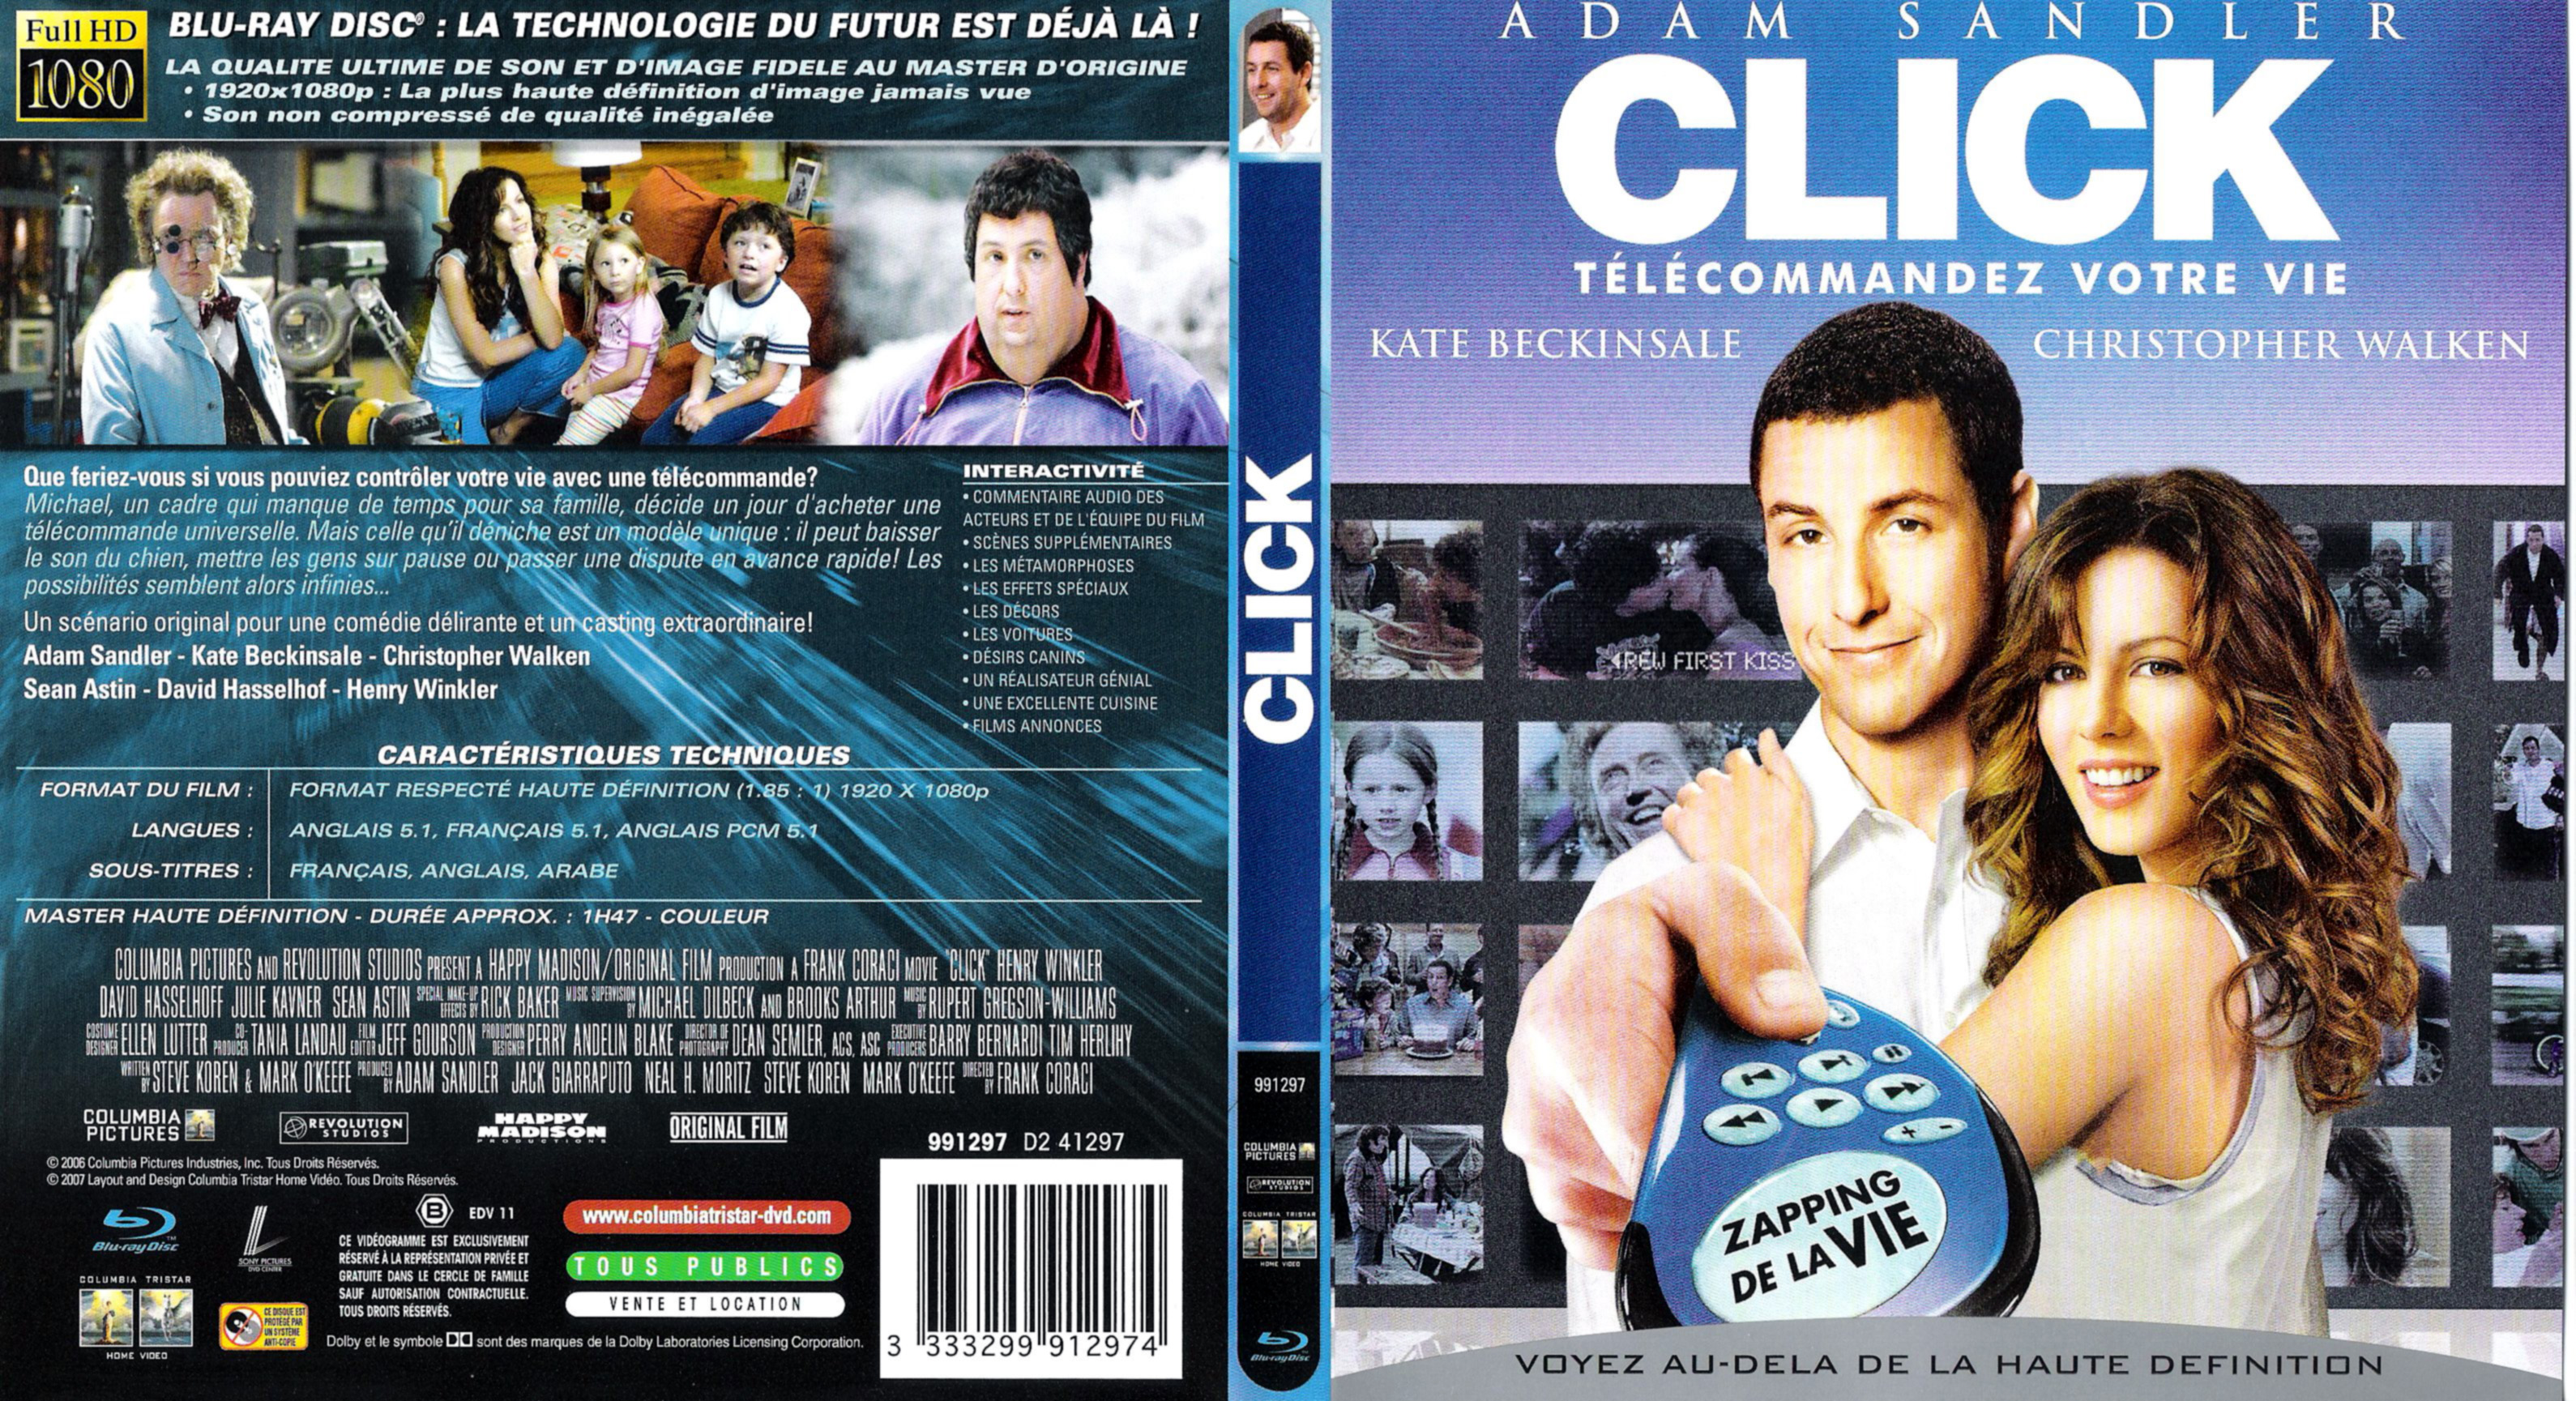 Jaquette DVD Click telecommandez votre vie (BLU-RAY) v2